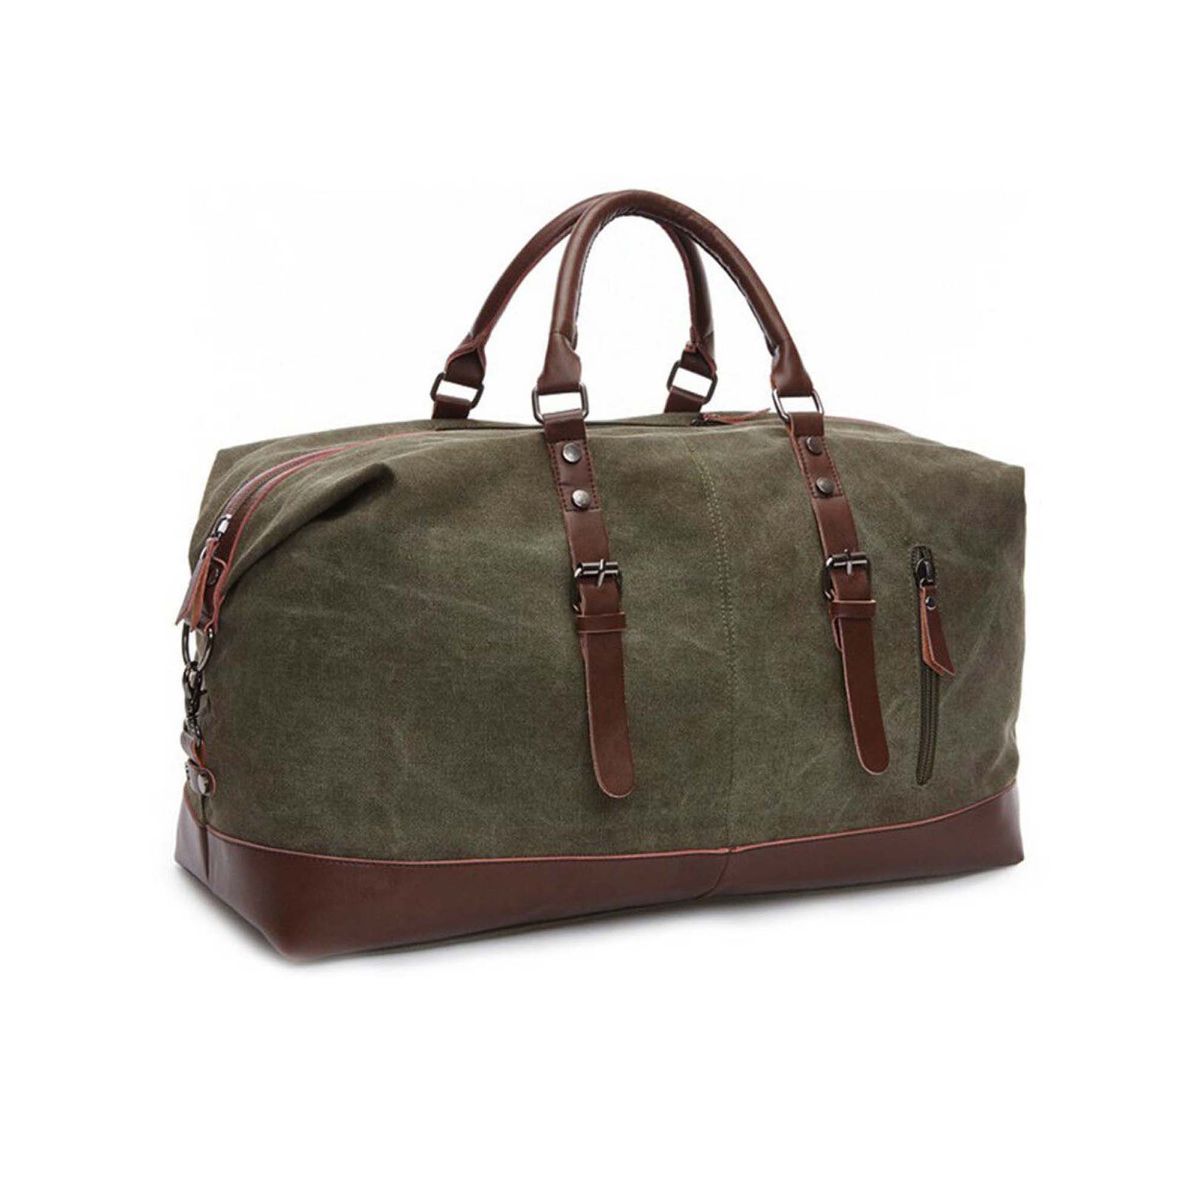 Jaald 20 Buffalo Leather Duffle Bag Travel Carry-on Luggage